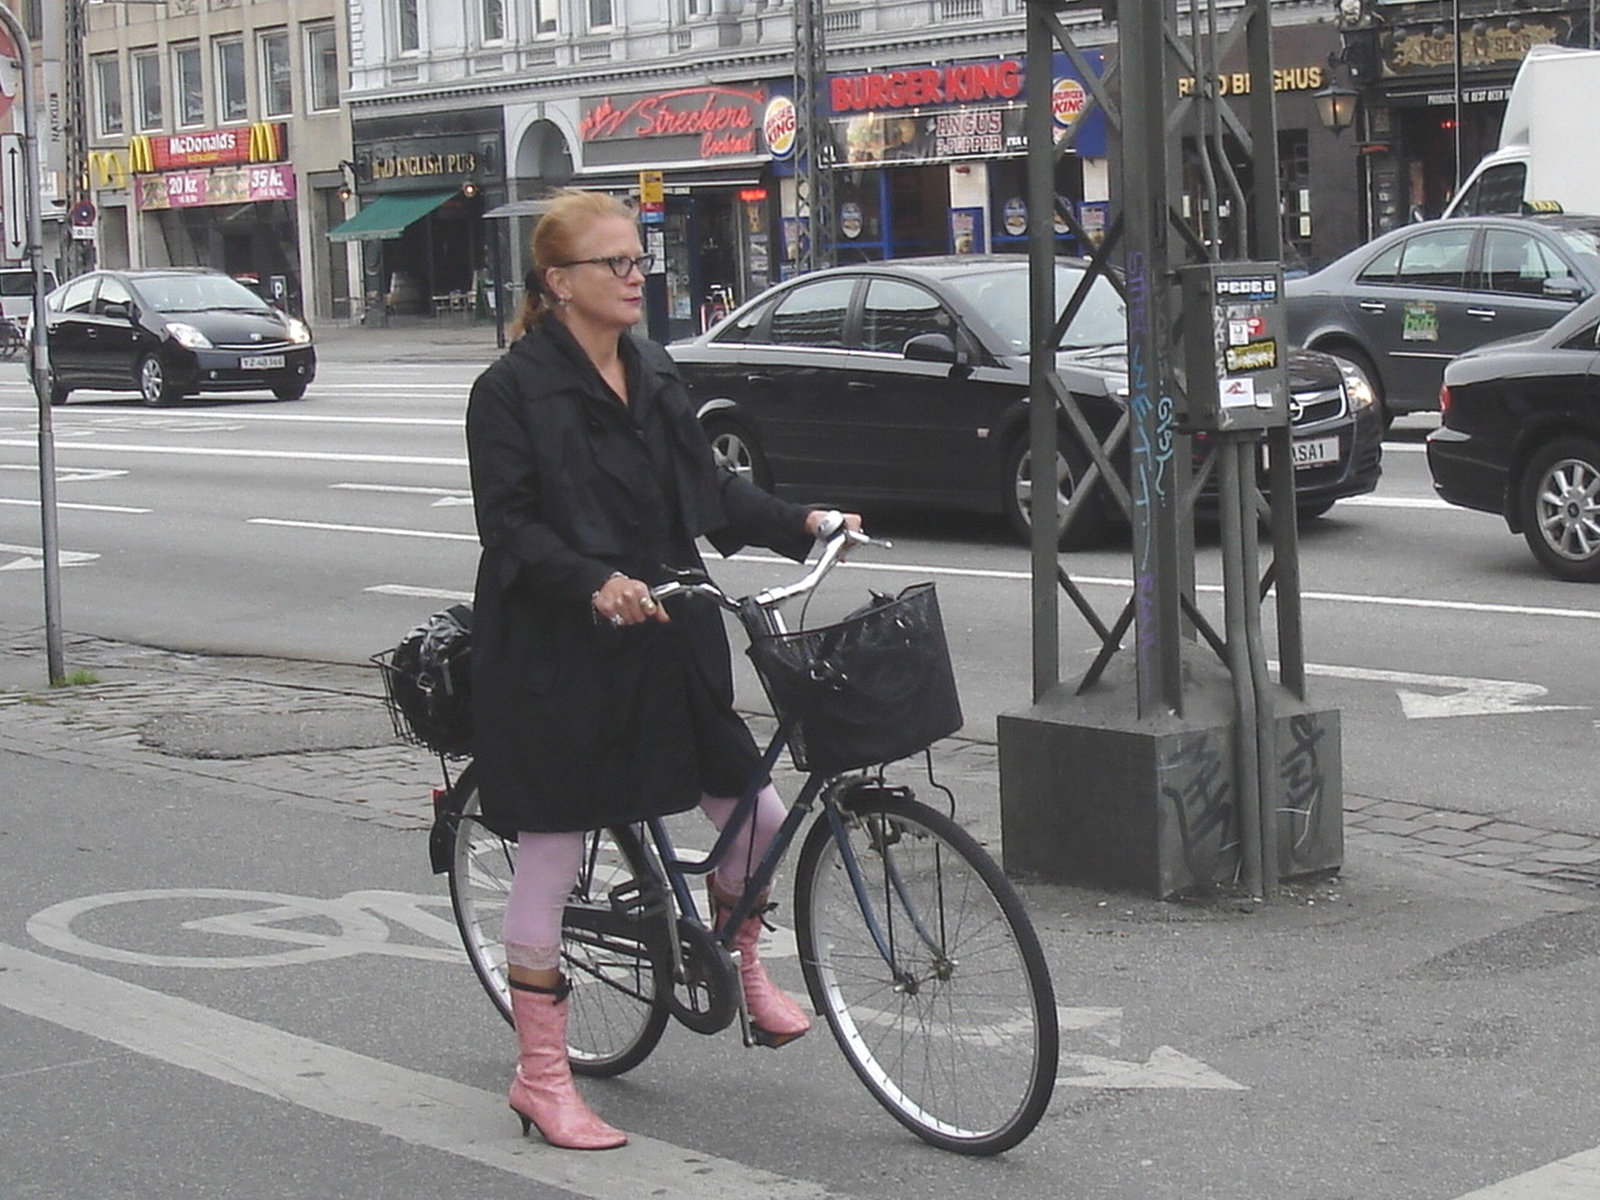 Readhead Danish mature Lady biker in colourful pale high-heeled boots